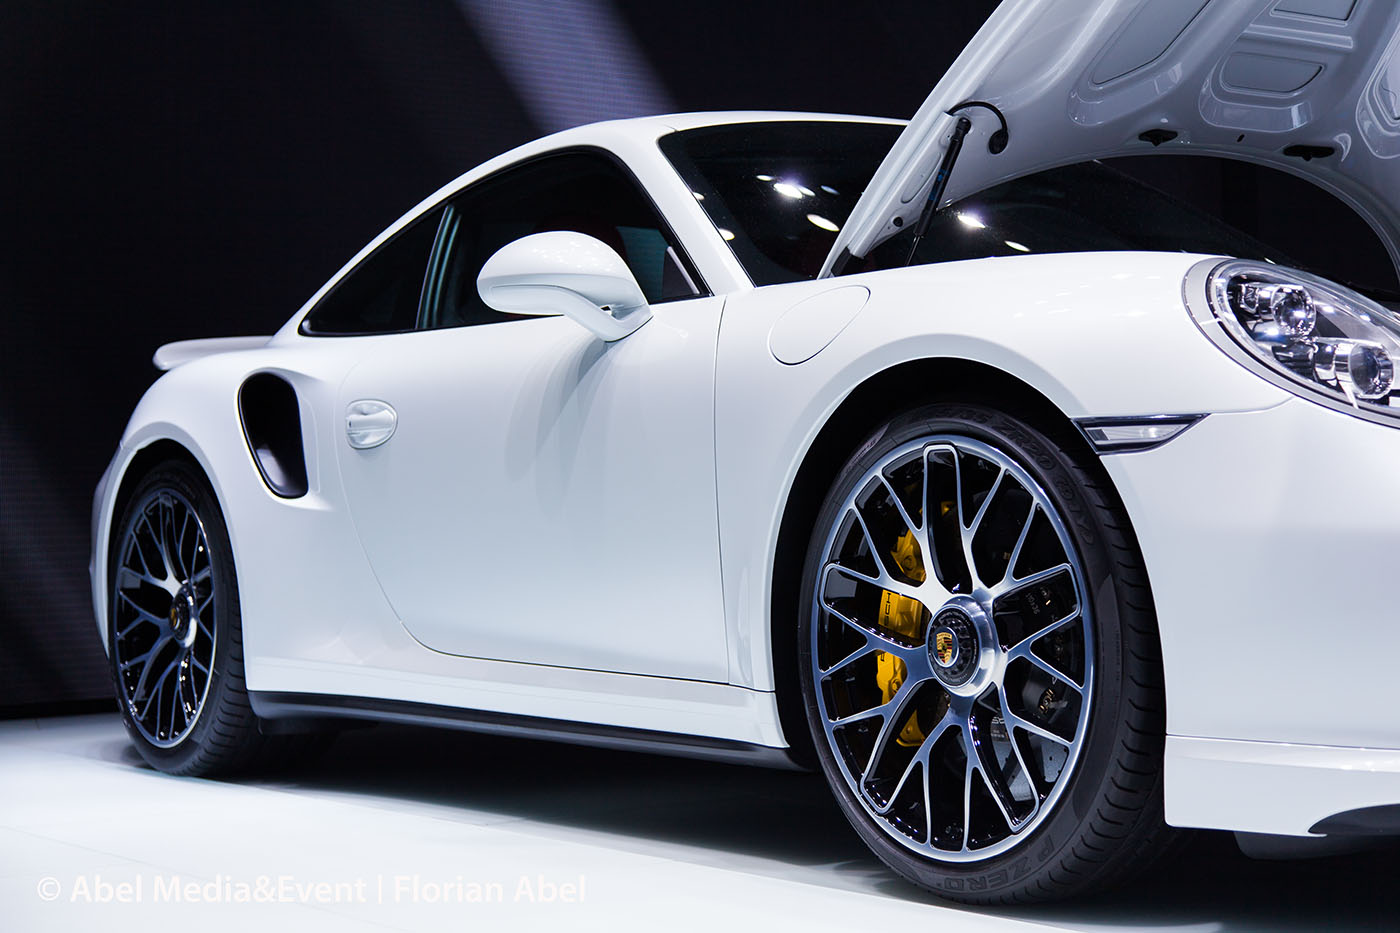 Porsche - International Motor Show Frankfurt 2013